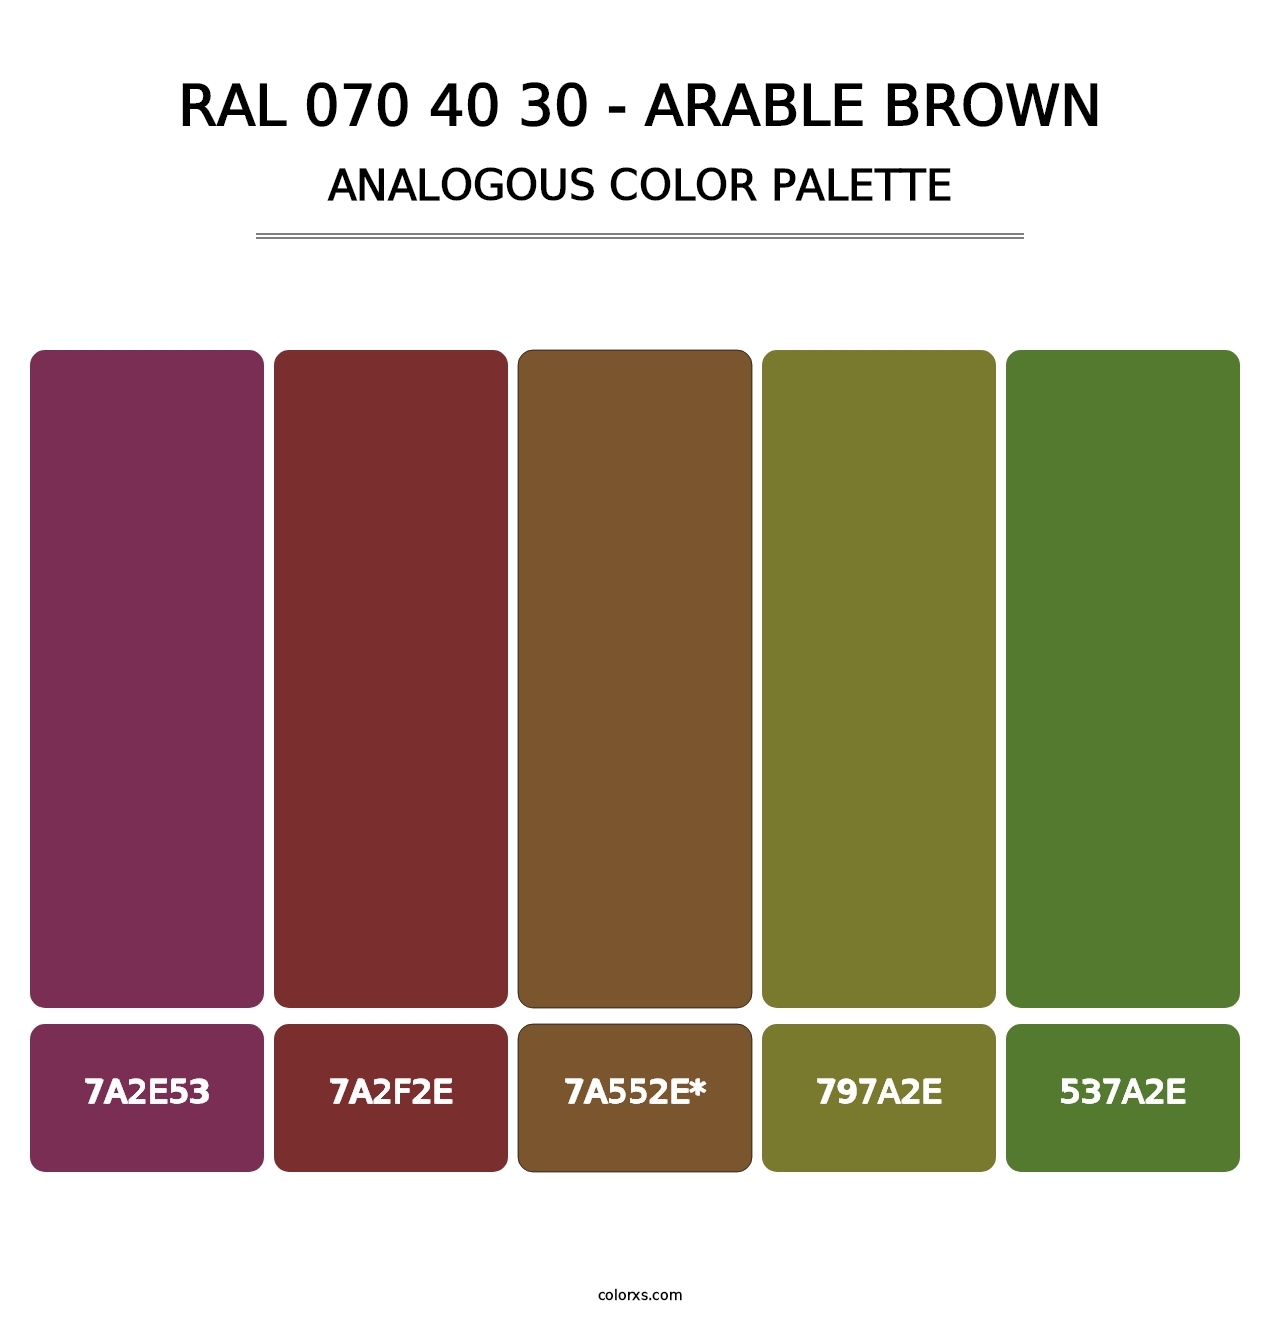 RAL 070 40 30 - Arable Brown - Analogous Color Palette